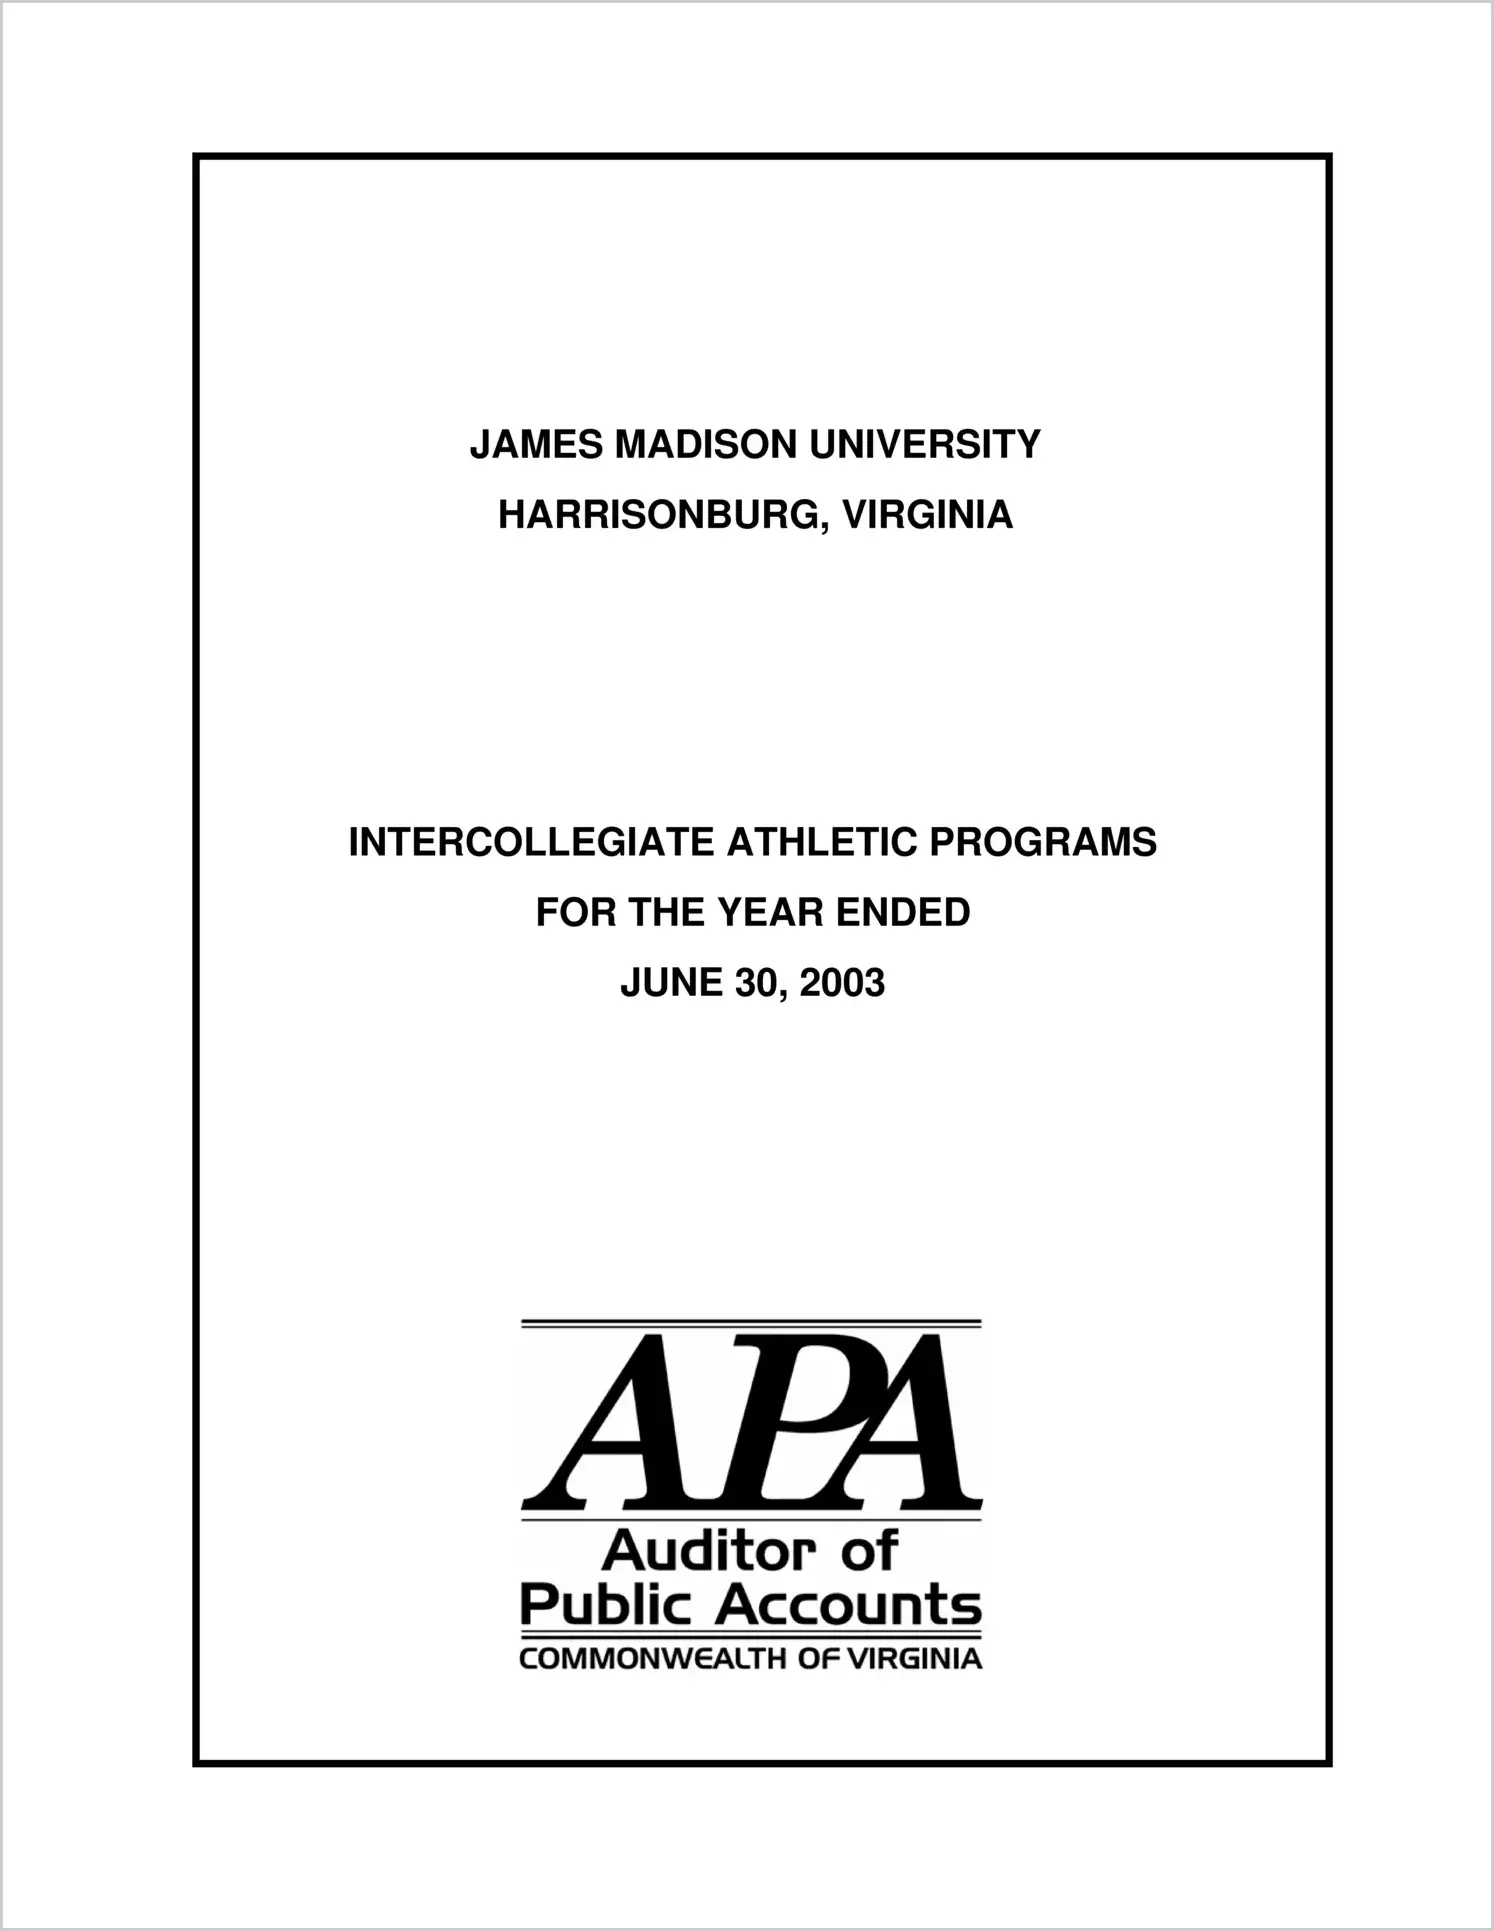 James Madison University Intercollegiate Athletic Programs for the year ended June 30, 2003